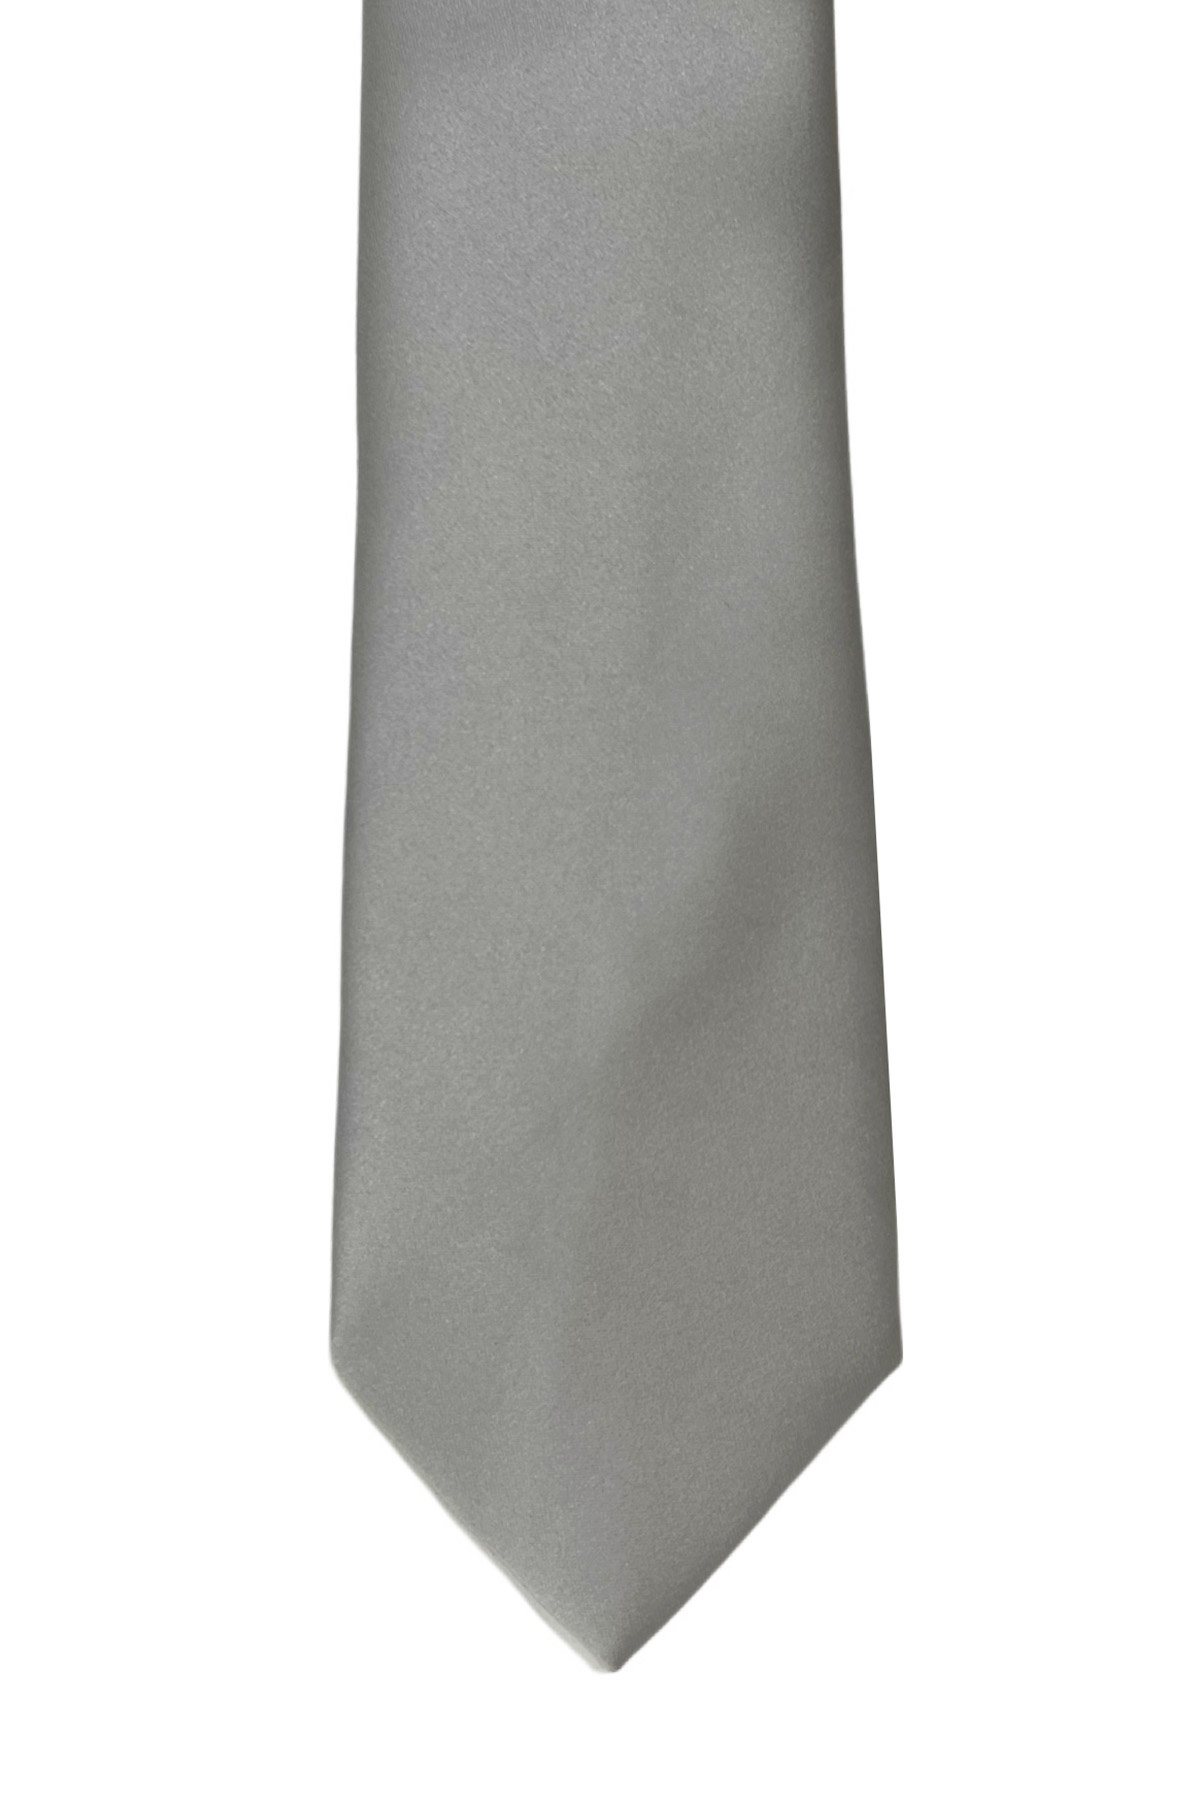 Cravatta uomo 100% seta tinta unita larghezza 8cm made in italy